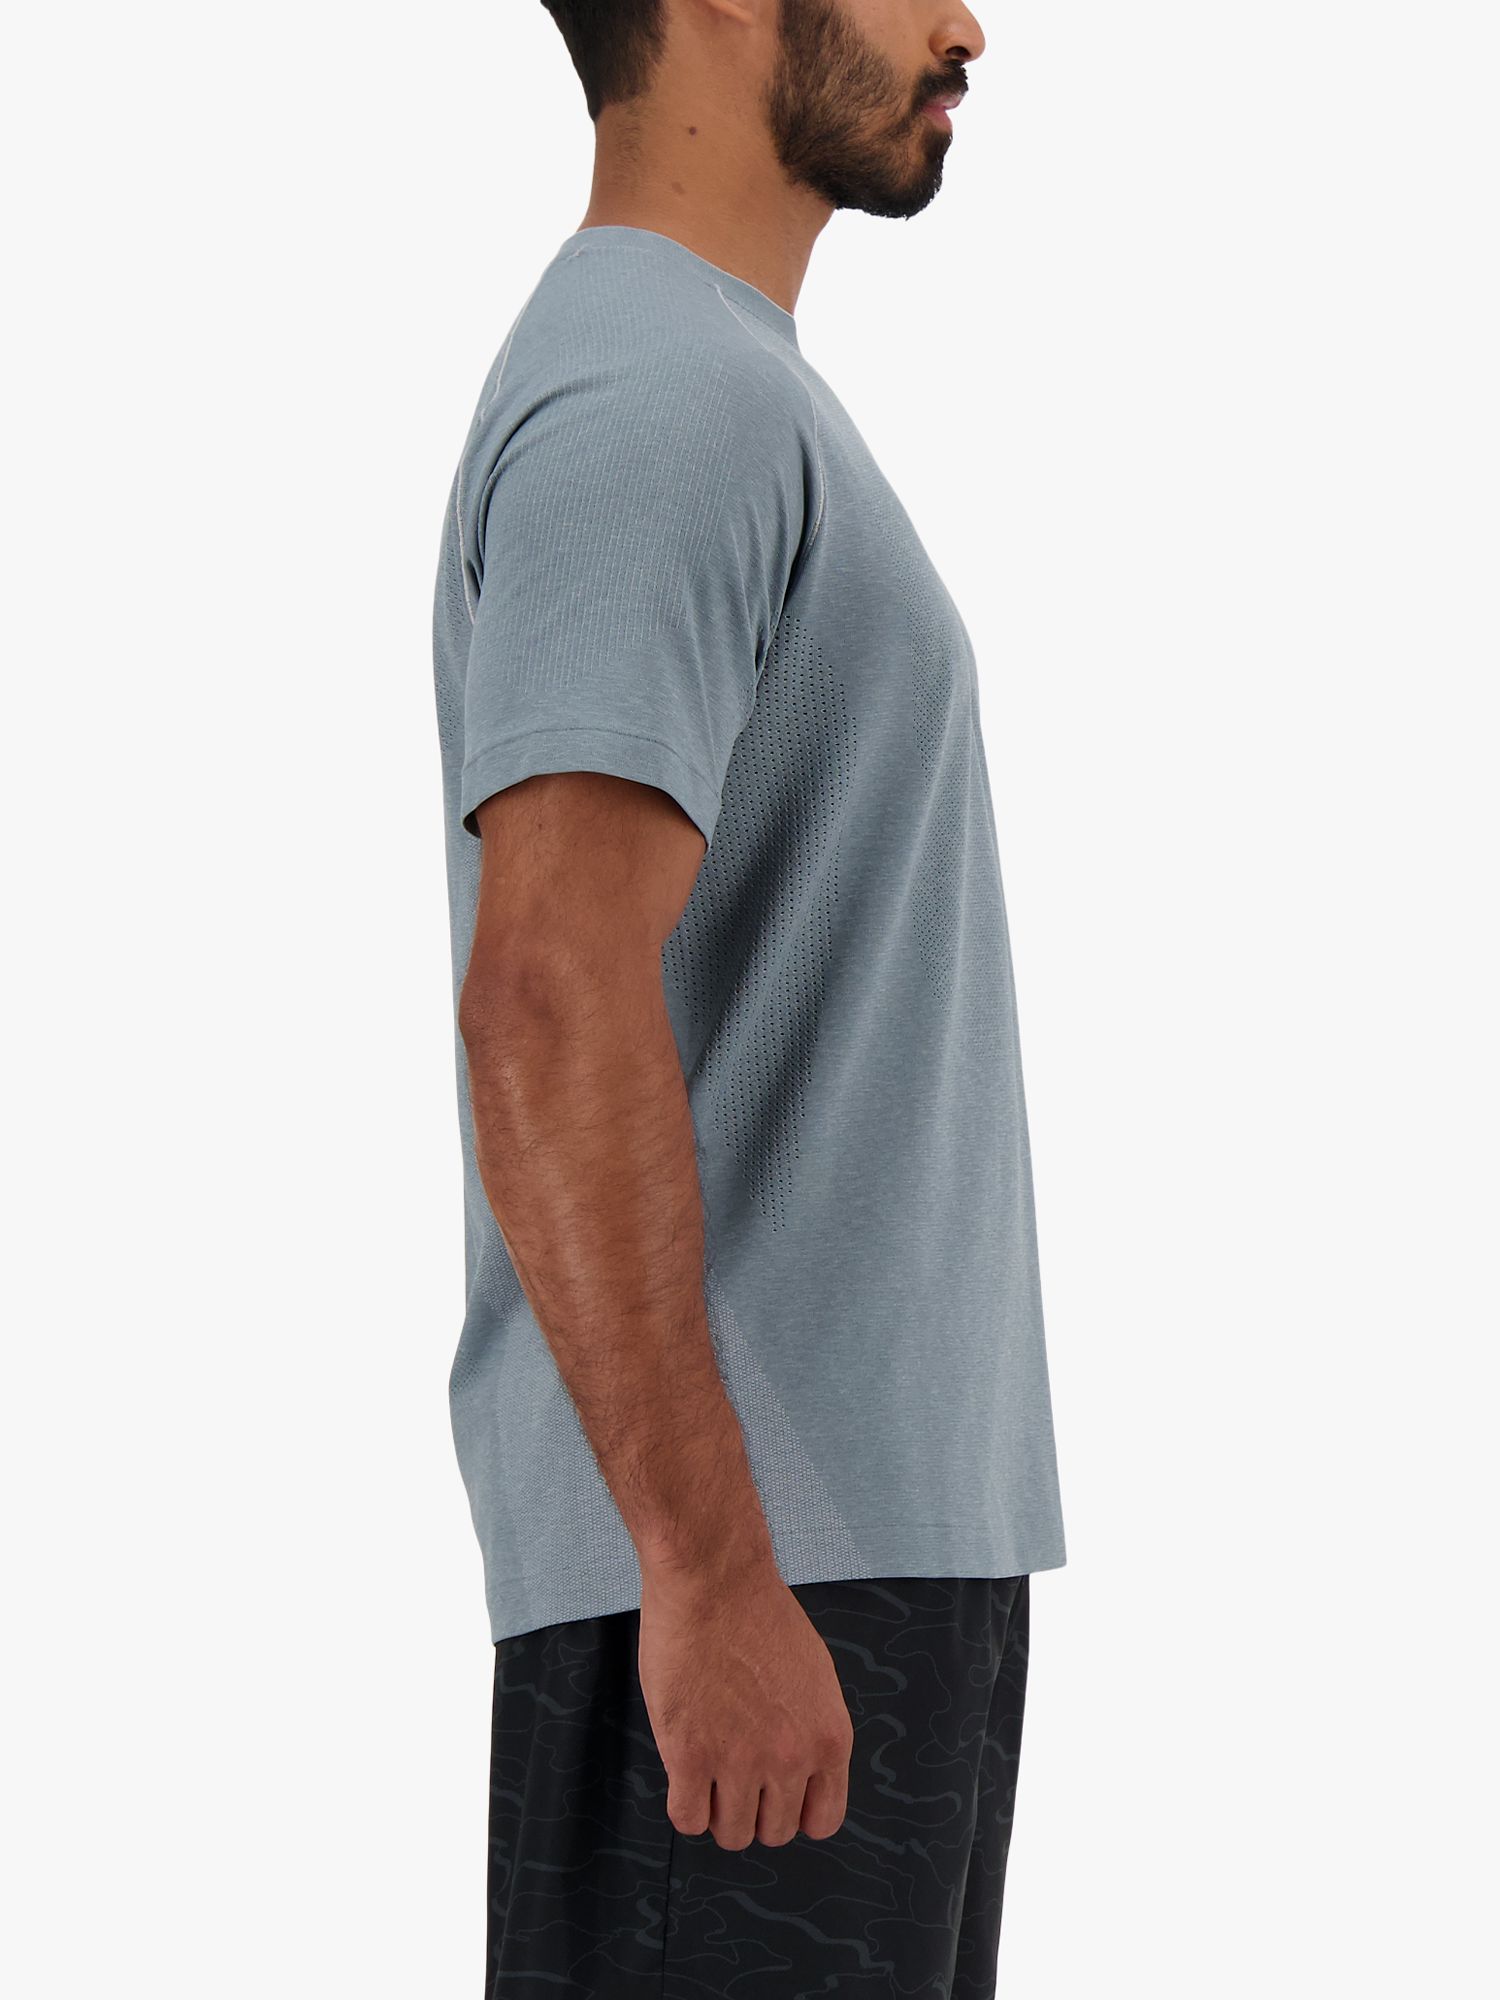 New Balance Knit T-Shirt, Athletic Grey, S